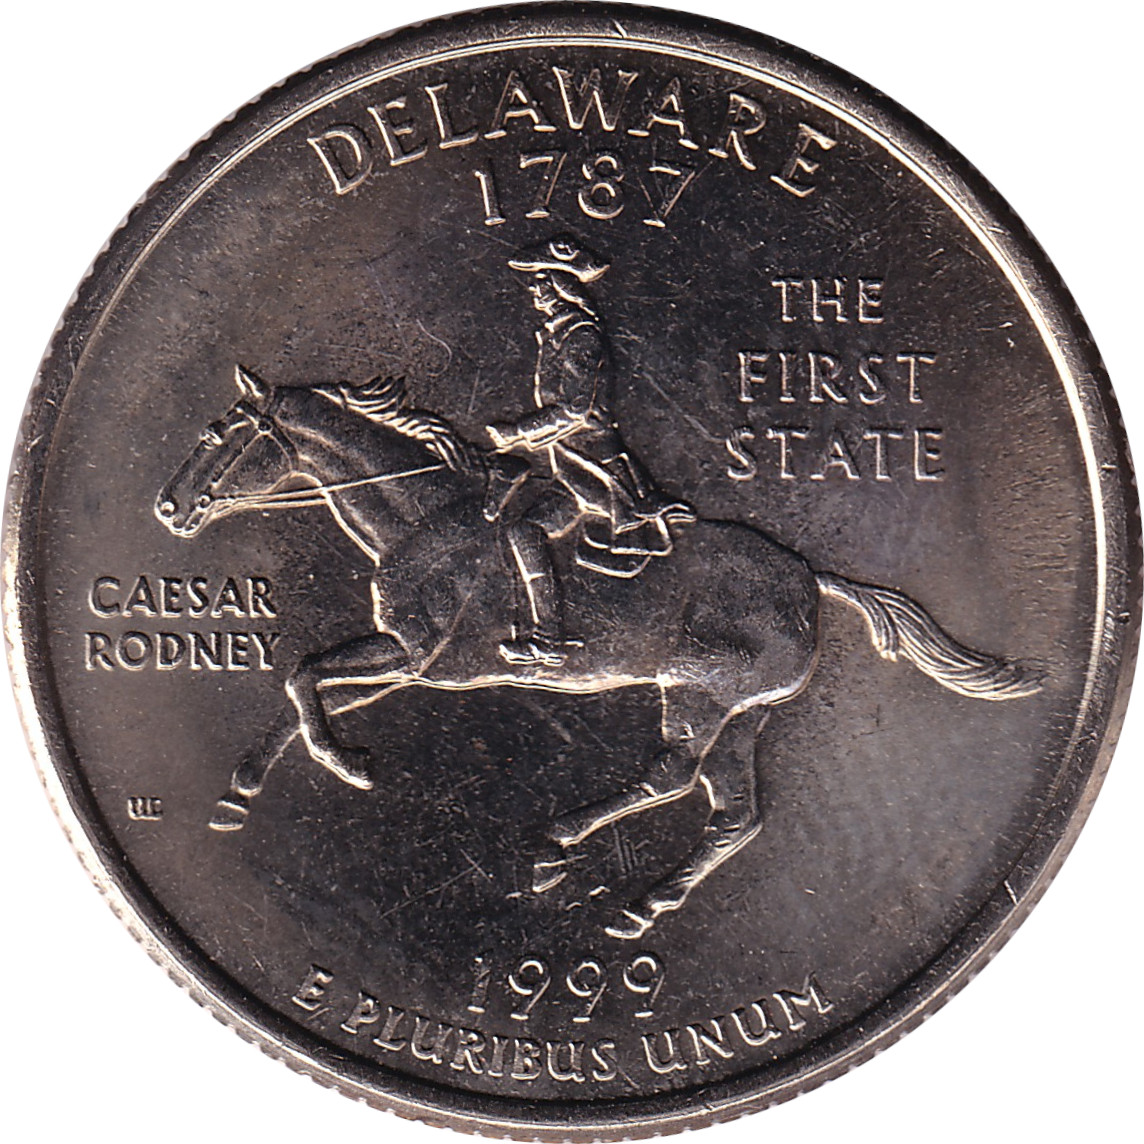 1/4 dollar - Delaware